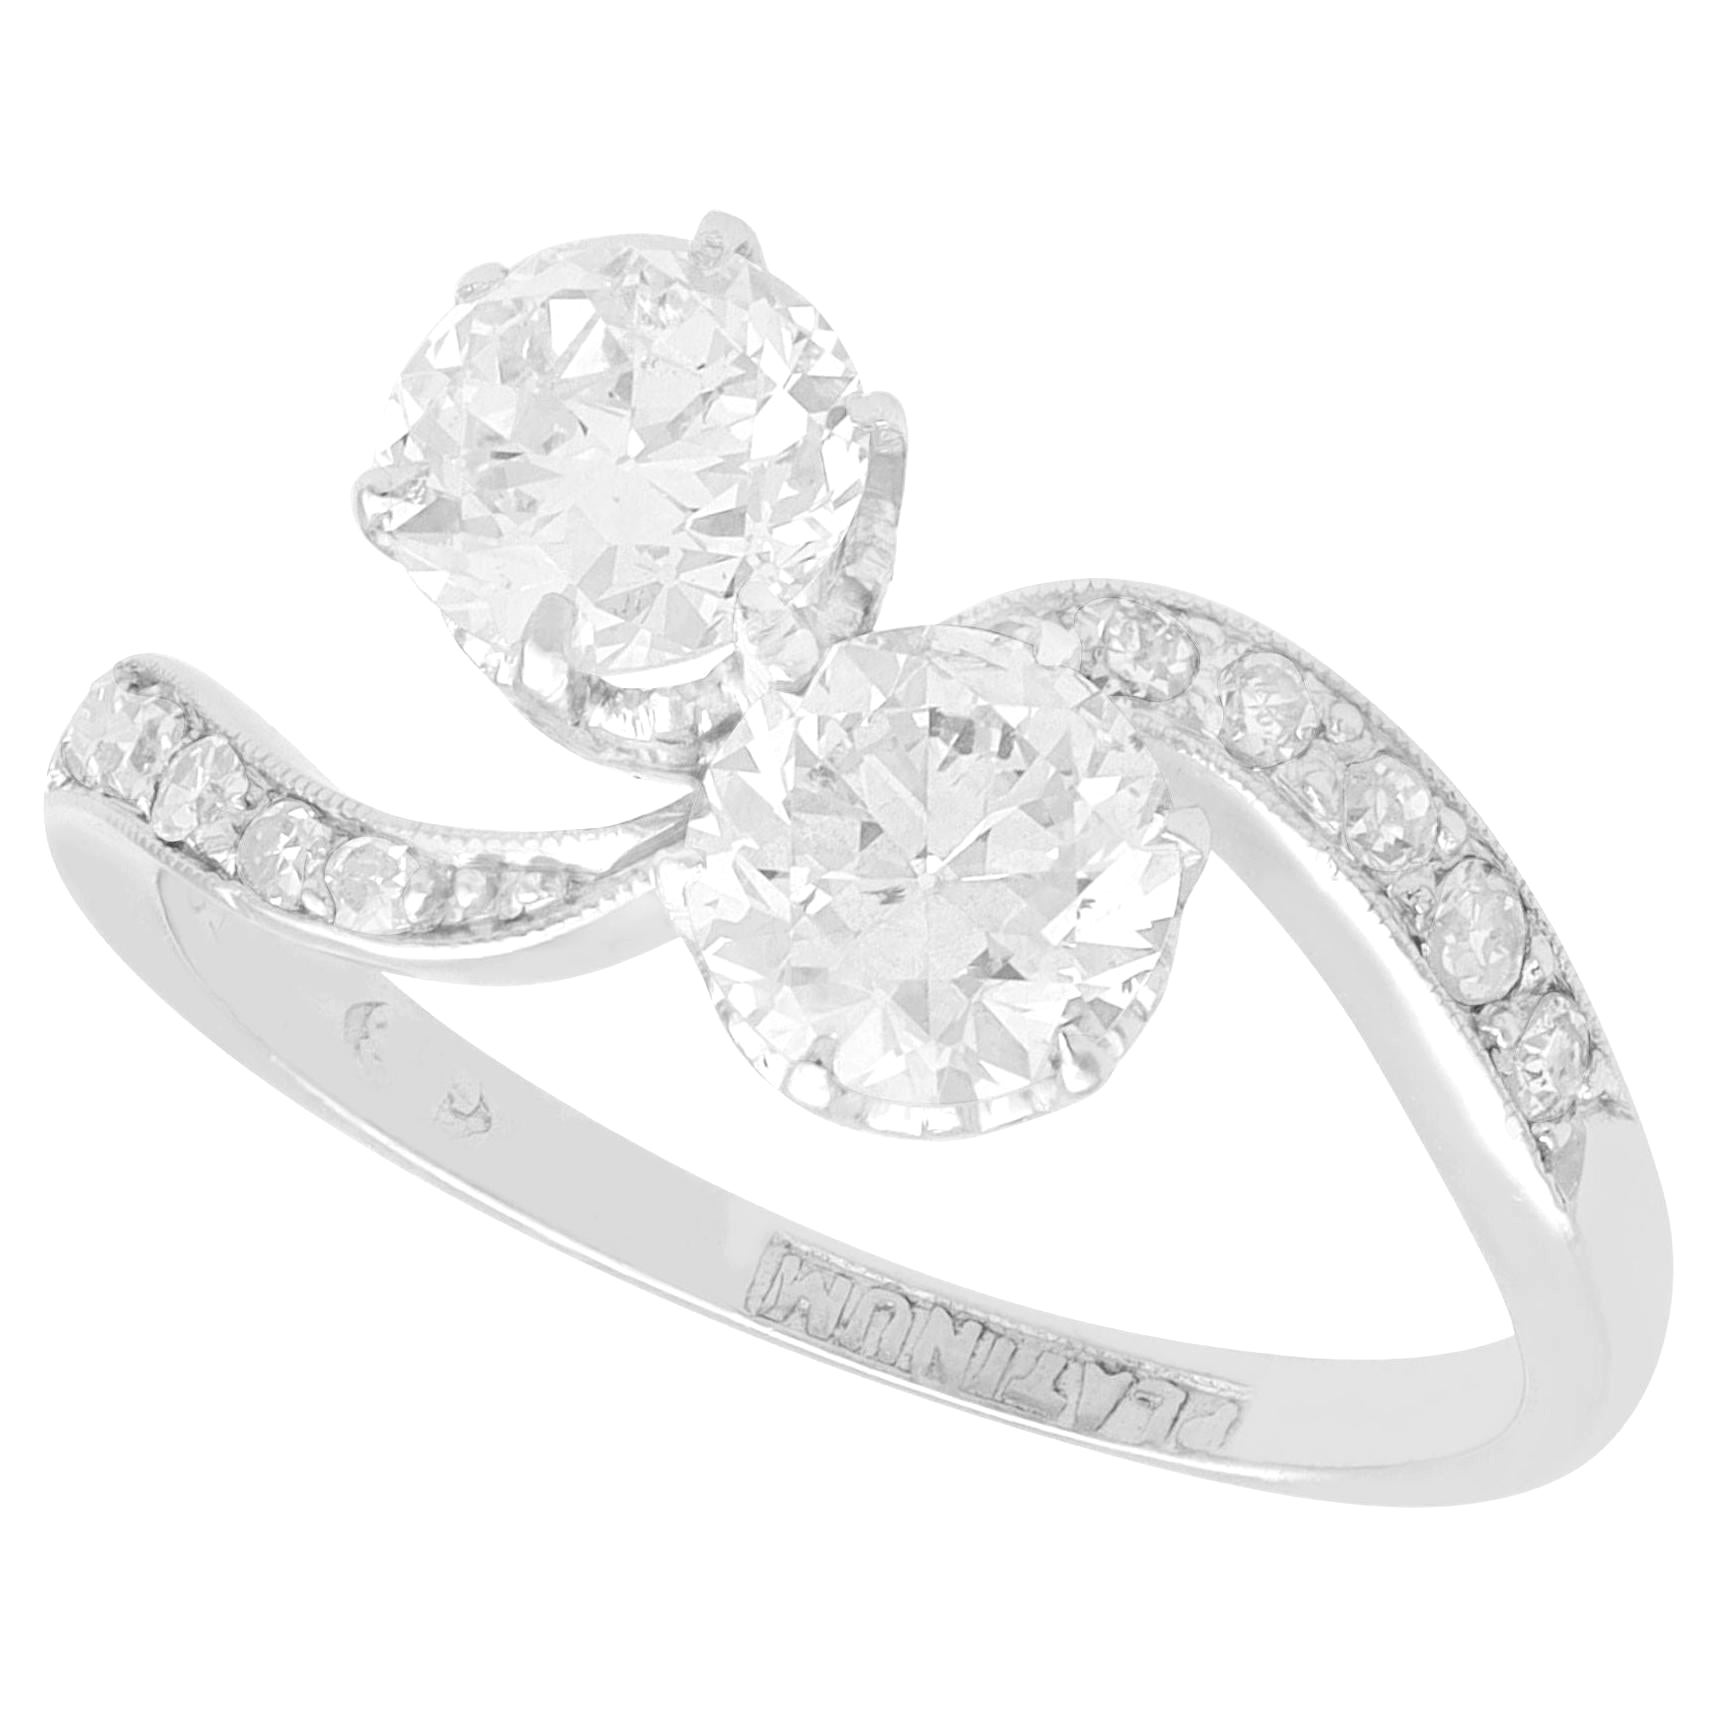 1920s Antique 1.53 Carat Diamond and Platinum Twist Engagement Ring For Sale